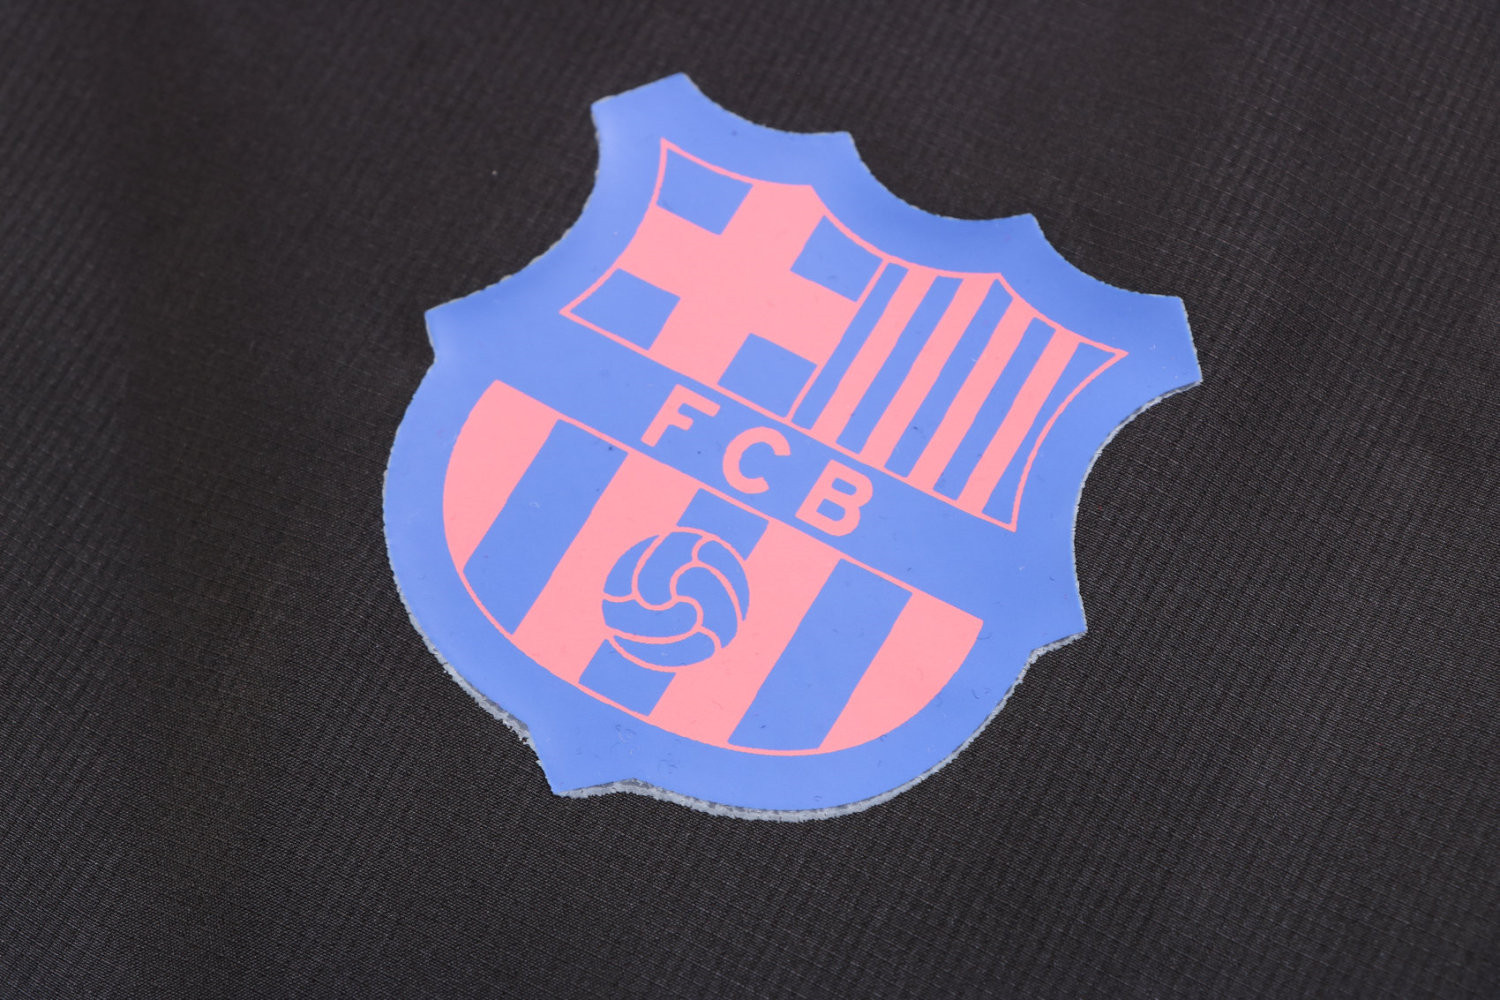 Barcelona All Weather Windrunner Soccer Jacket Black Mens 2022/23